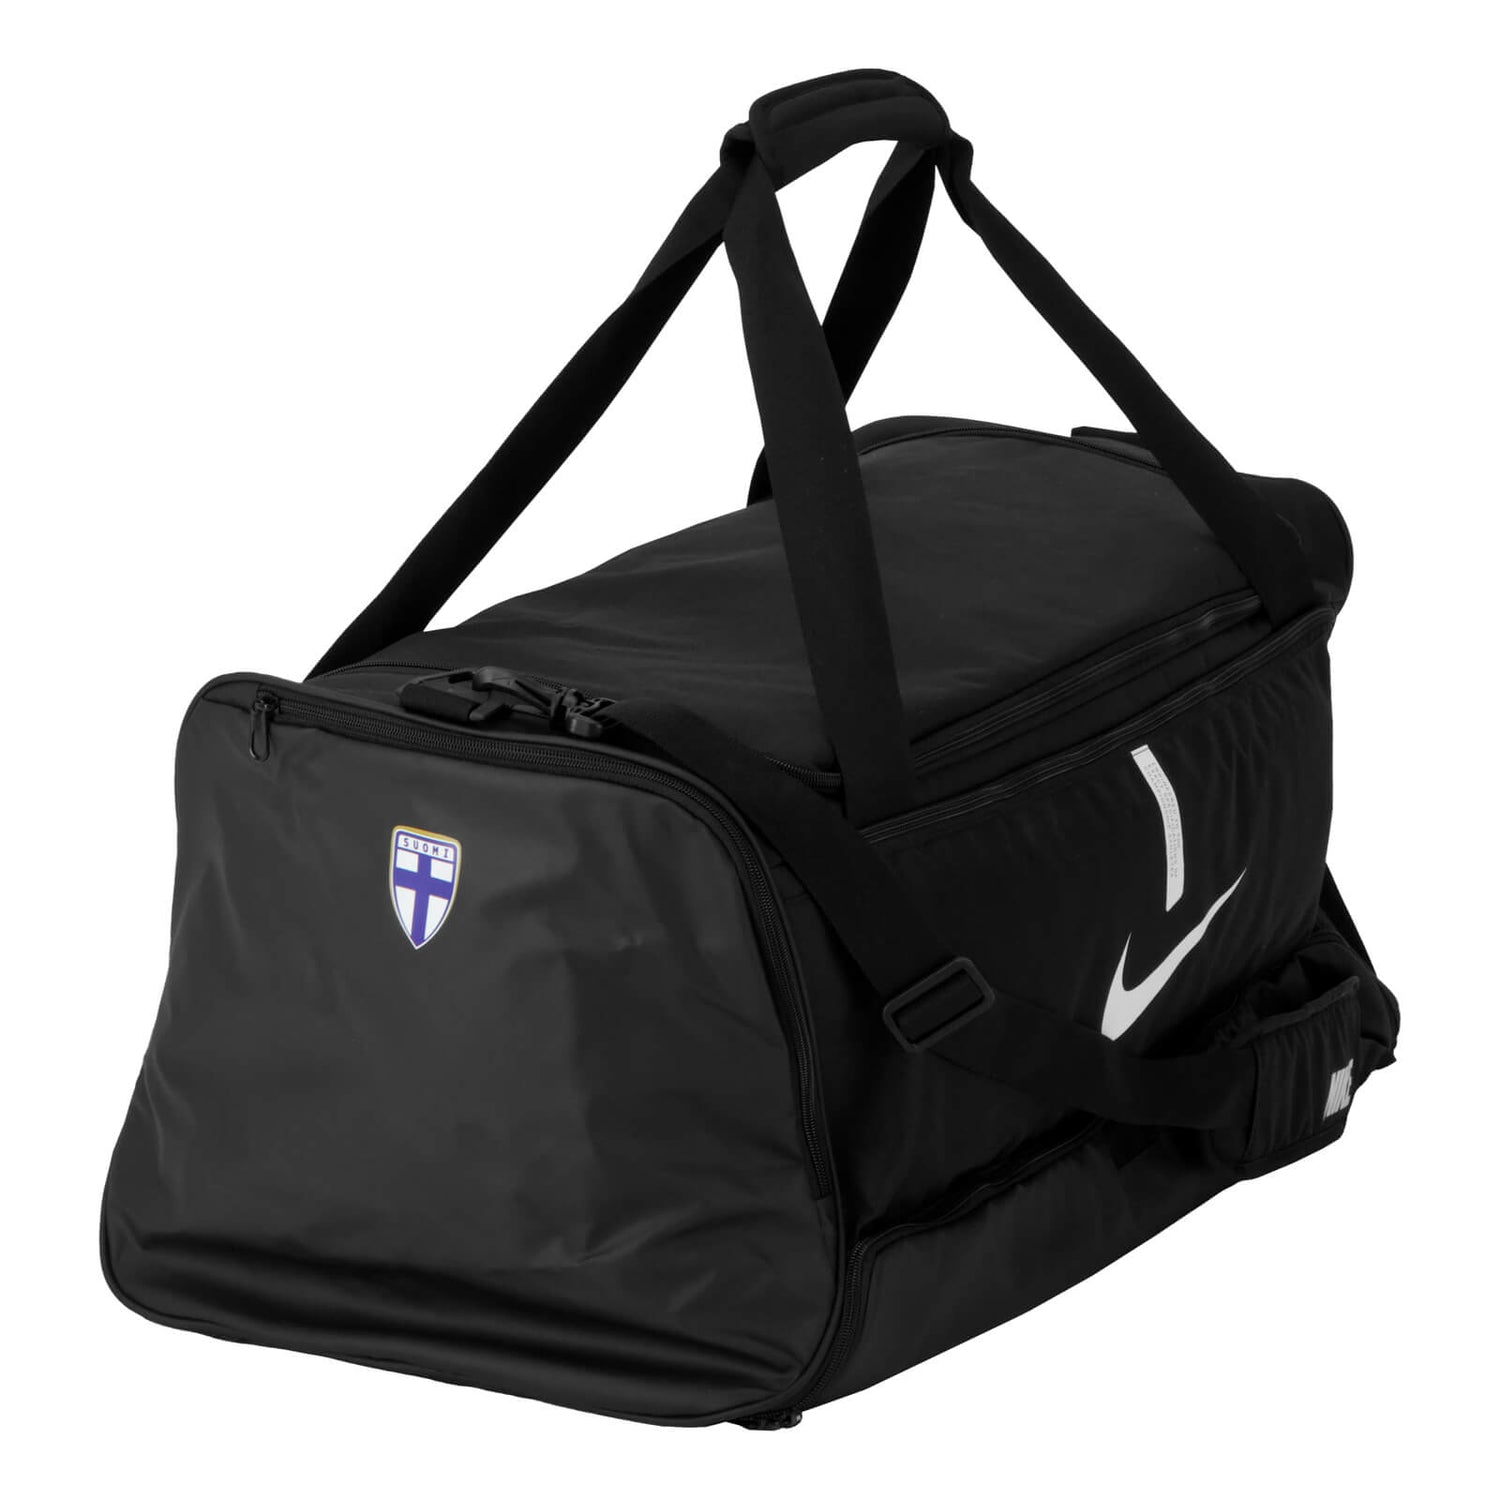 Academy Team XL, sports bag